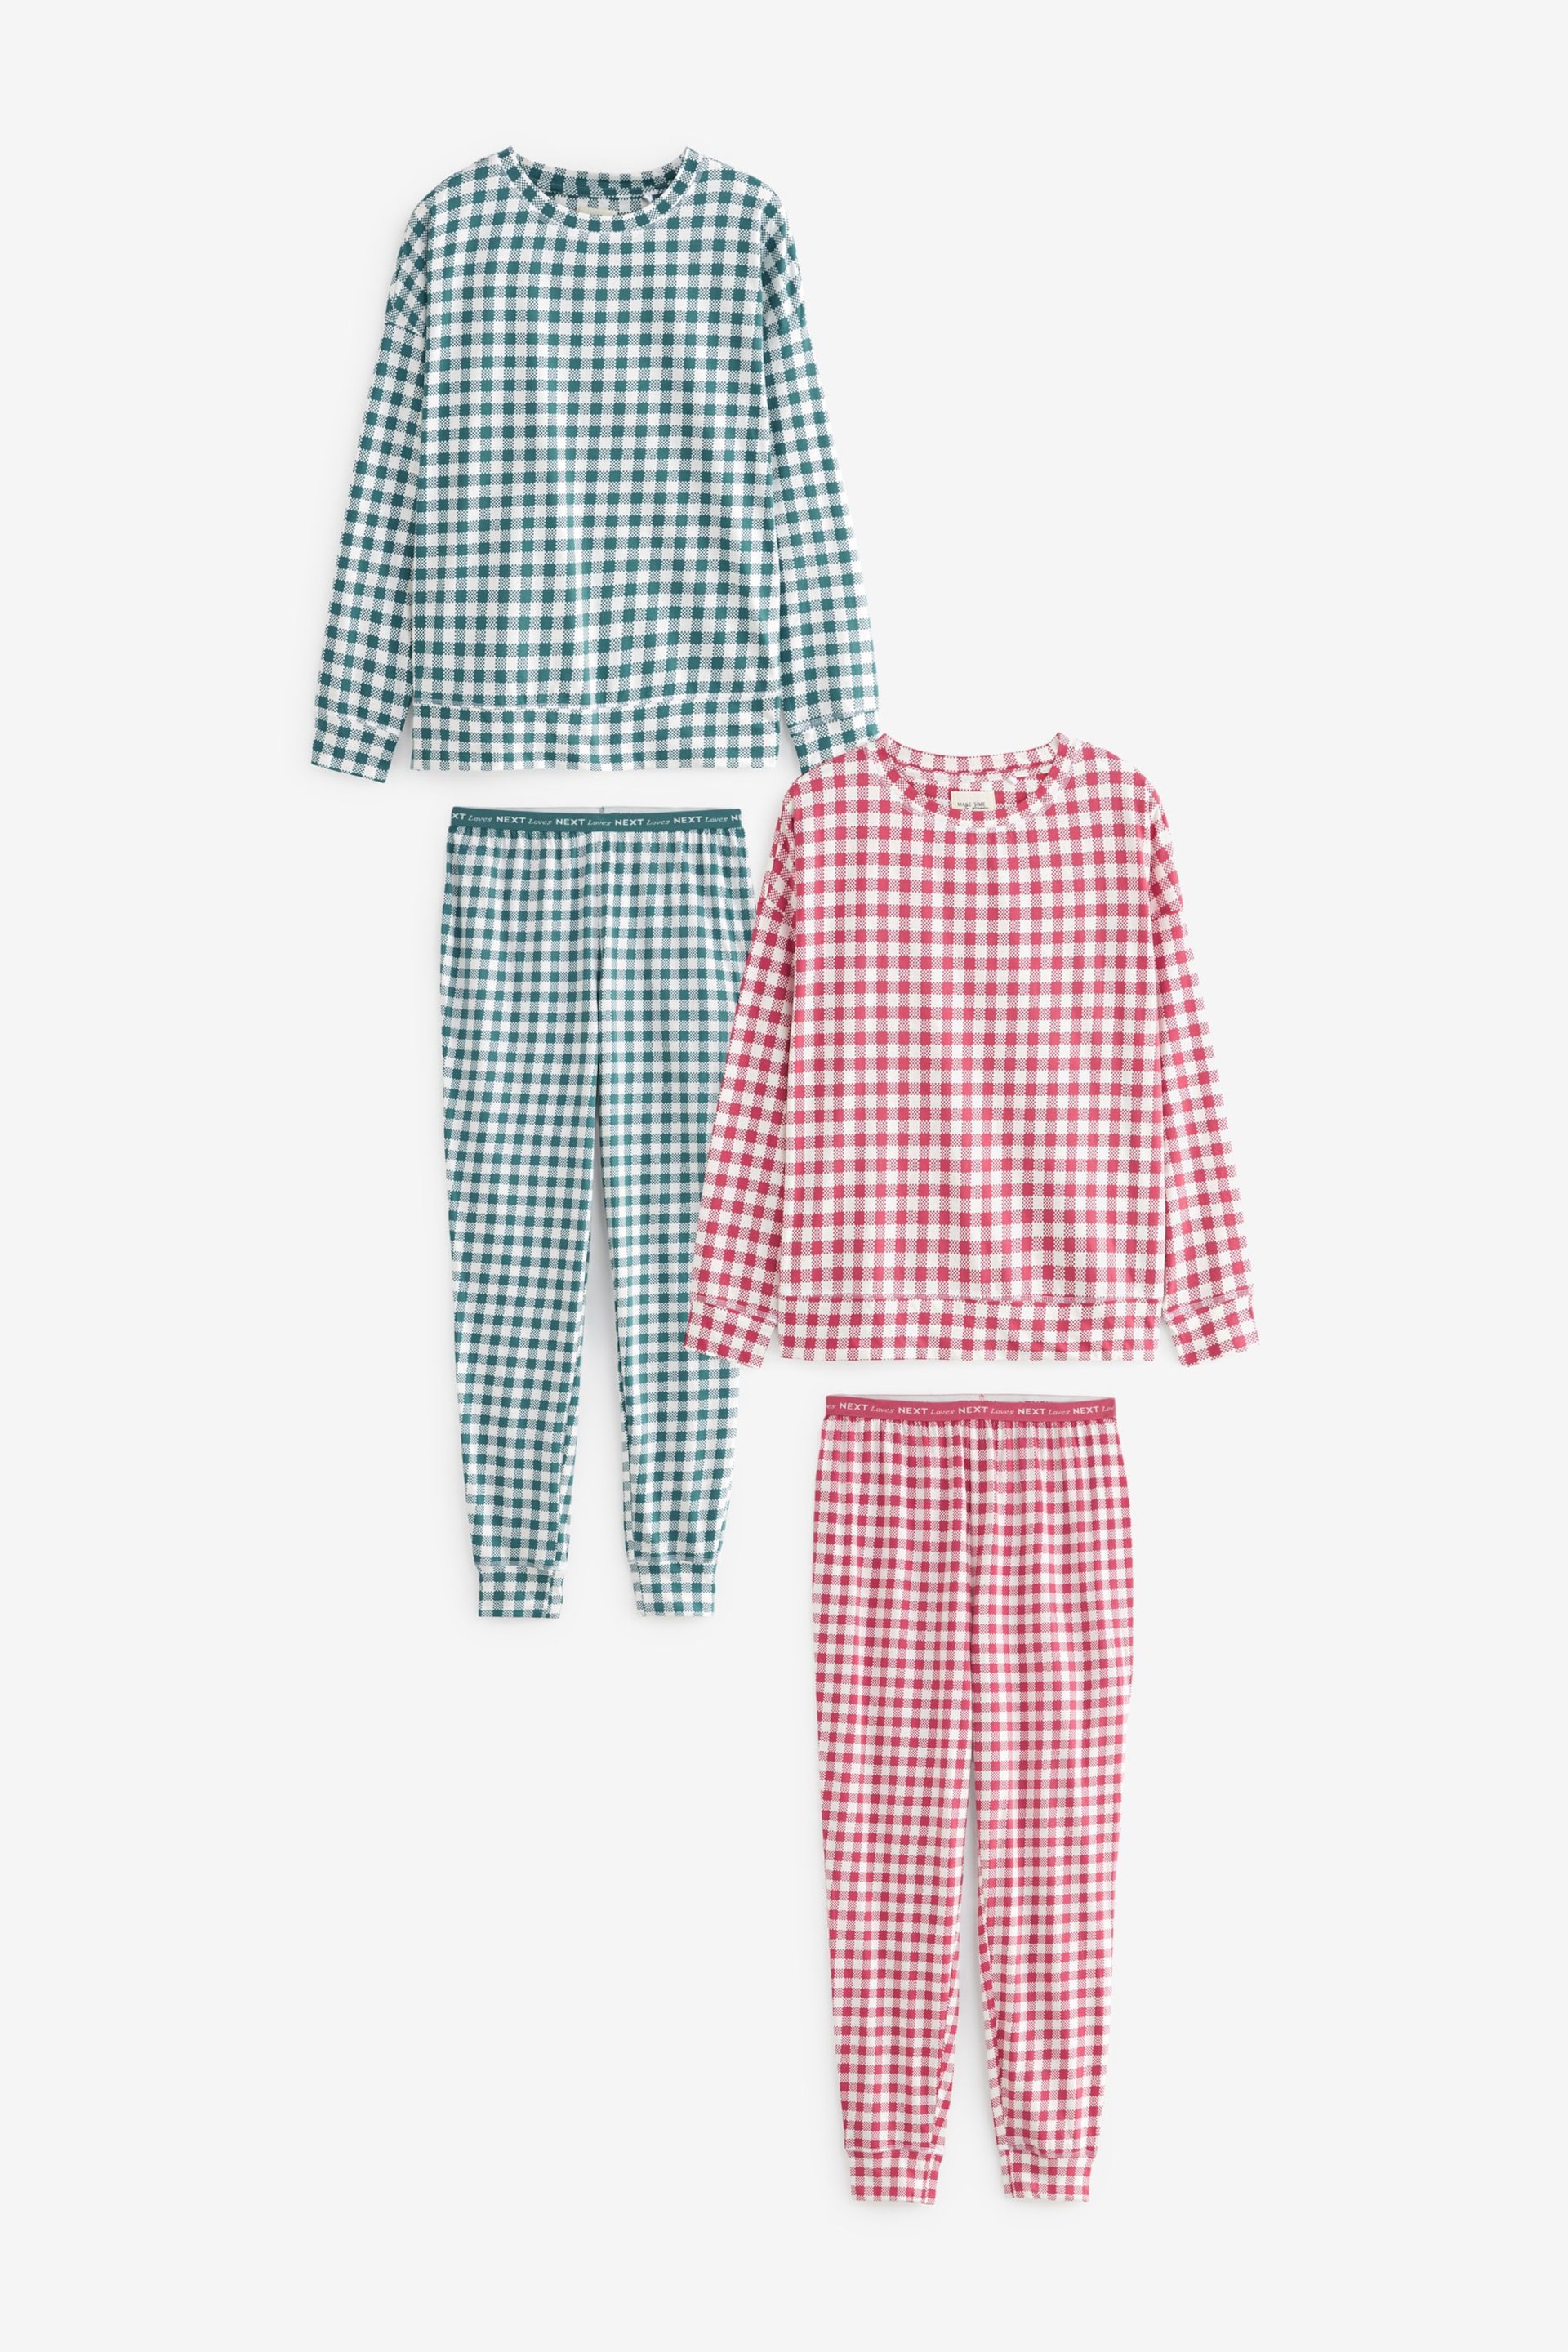 Blue/Pink Cotton Long Sleeve Pyjamas 2 Pack - Image 1 of 10